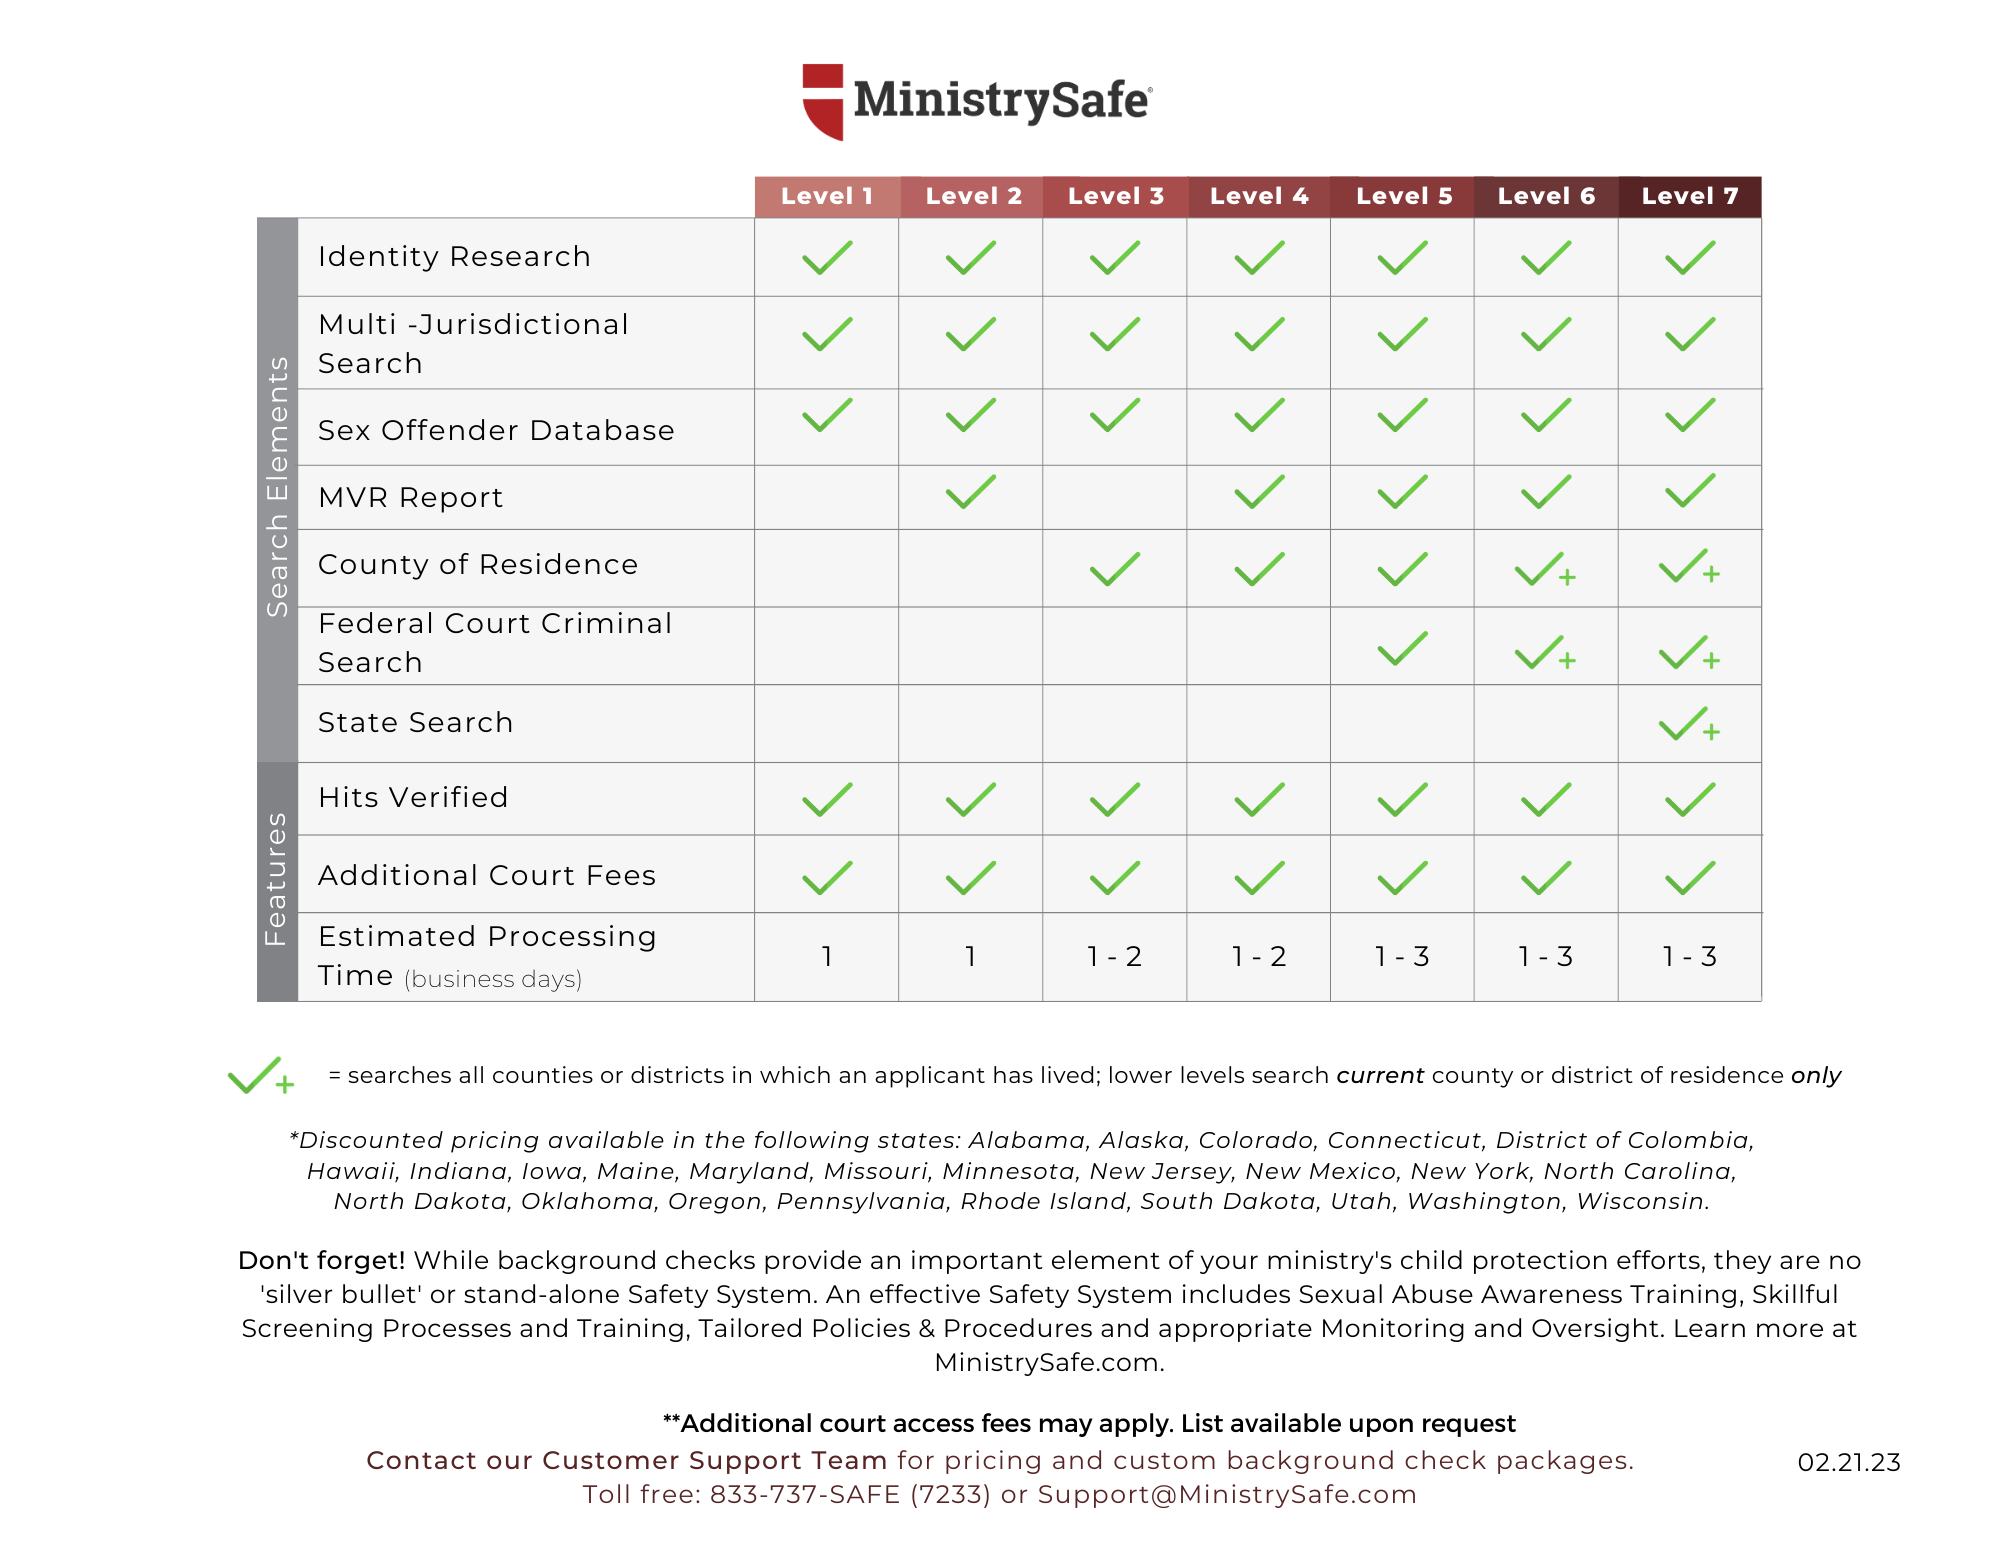 Pricing – MinistrySafe